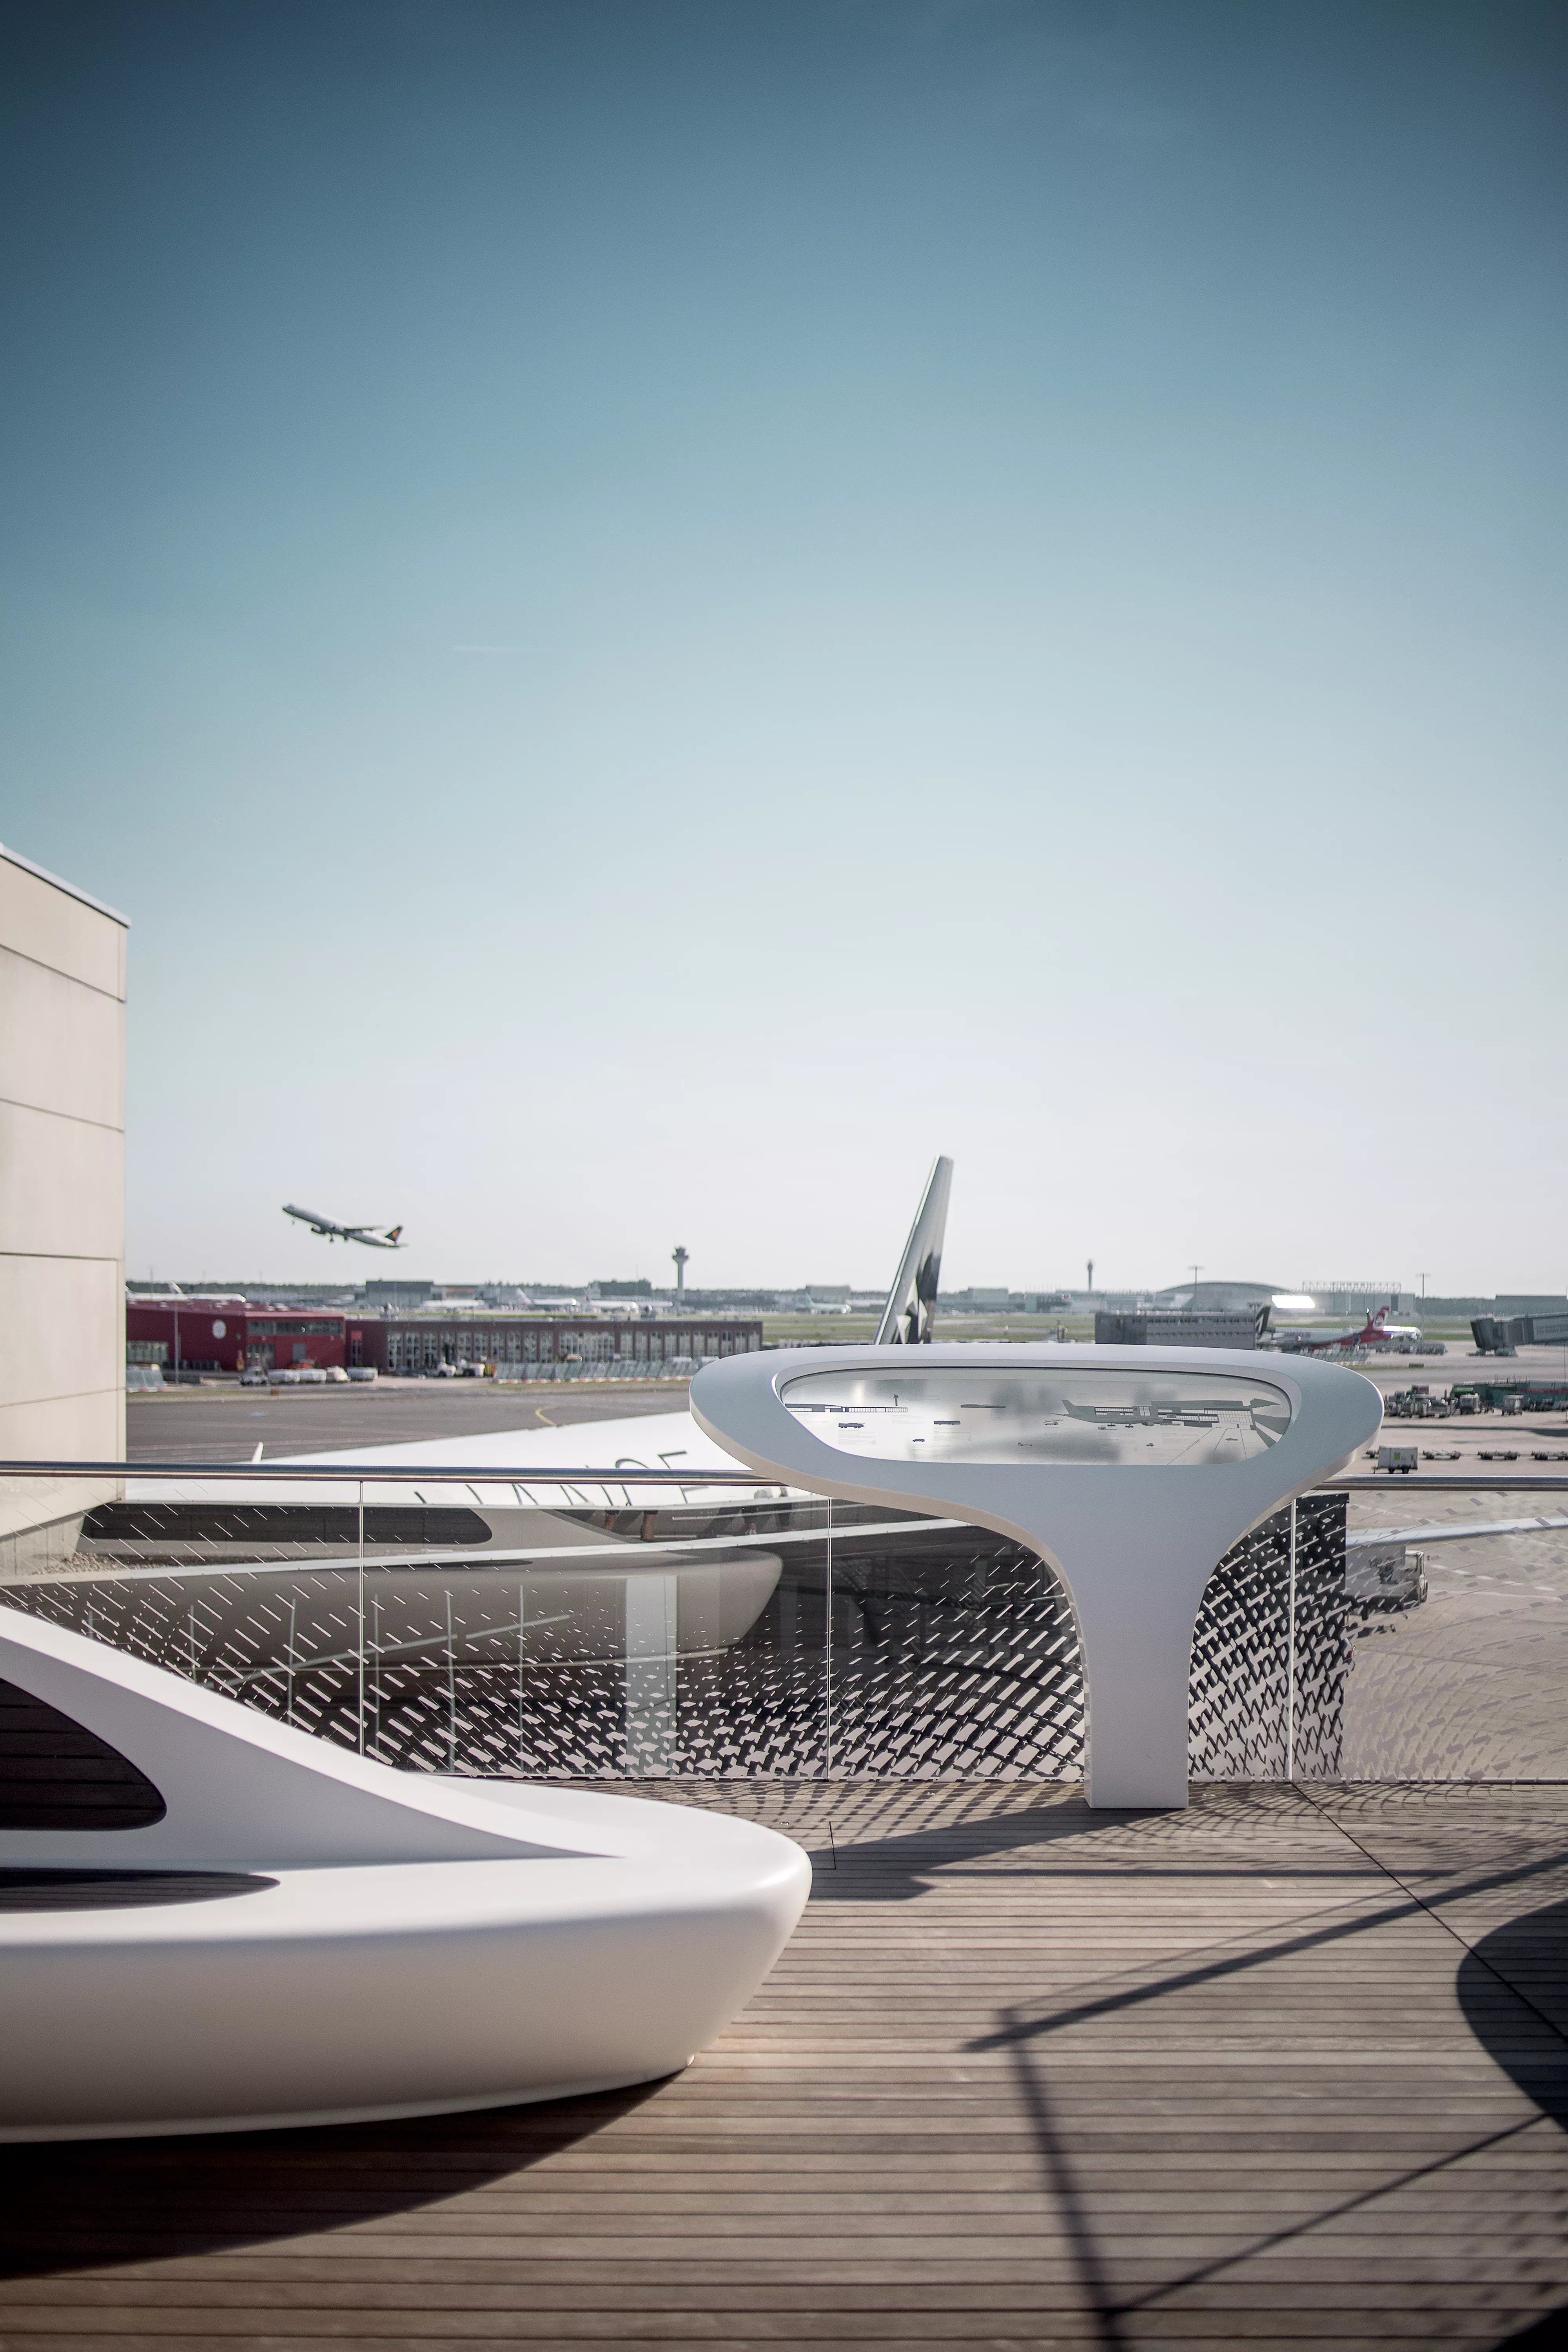 Frankfurt Airport’s new Open Air Deck